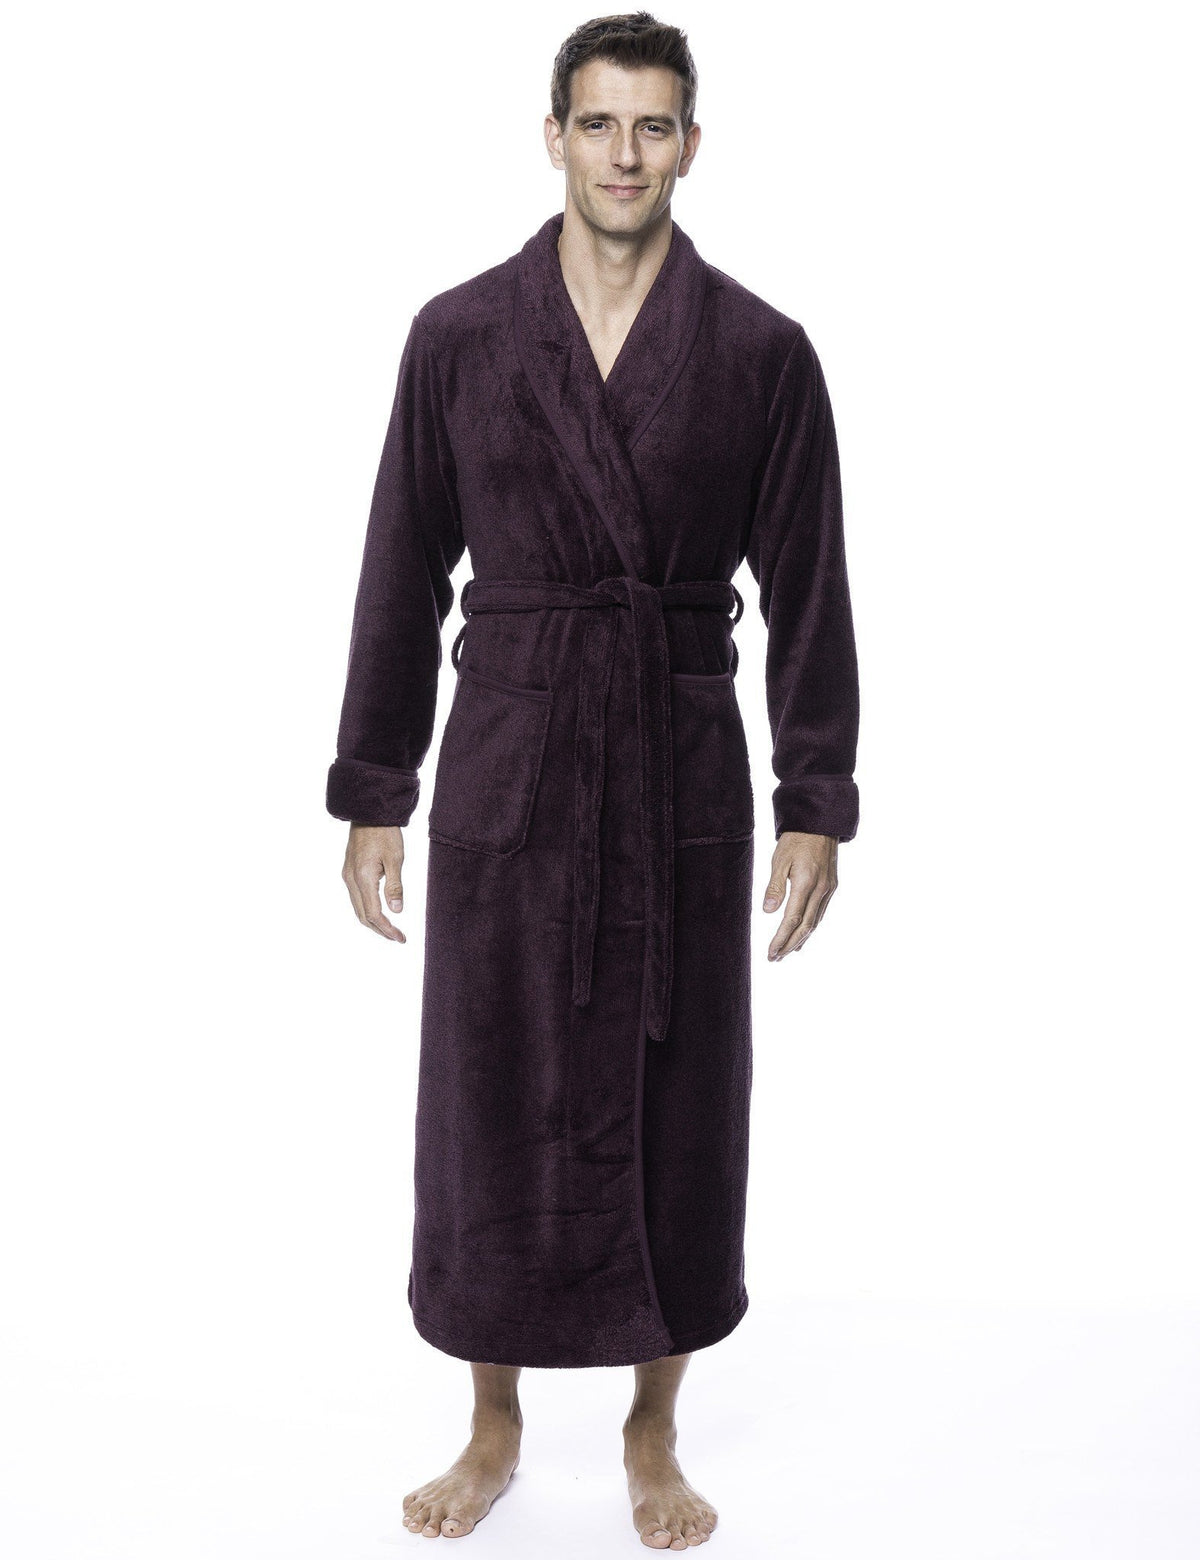 Men's Premium Coral Fleece Full Length Plush Spa/Bath Robe - Marl Fig/Black